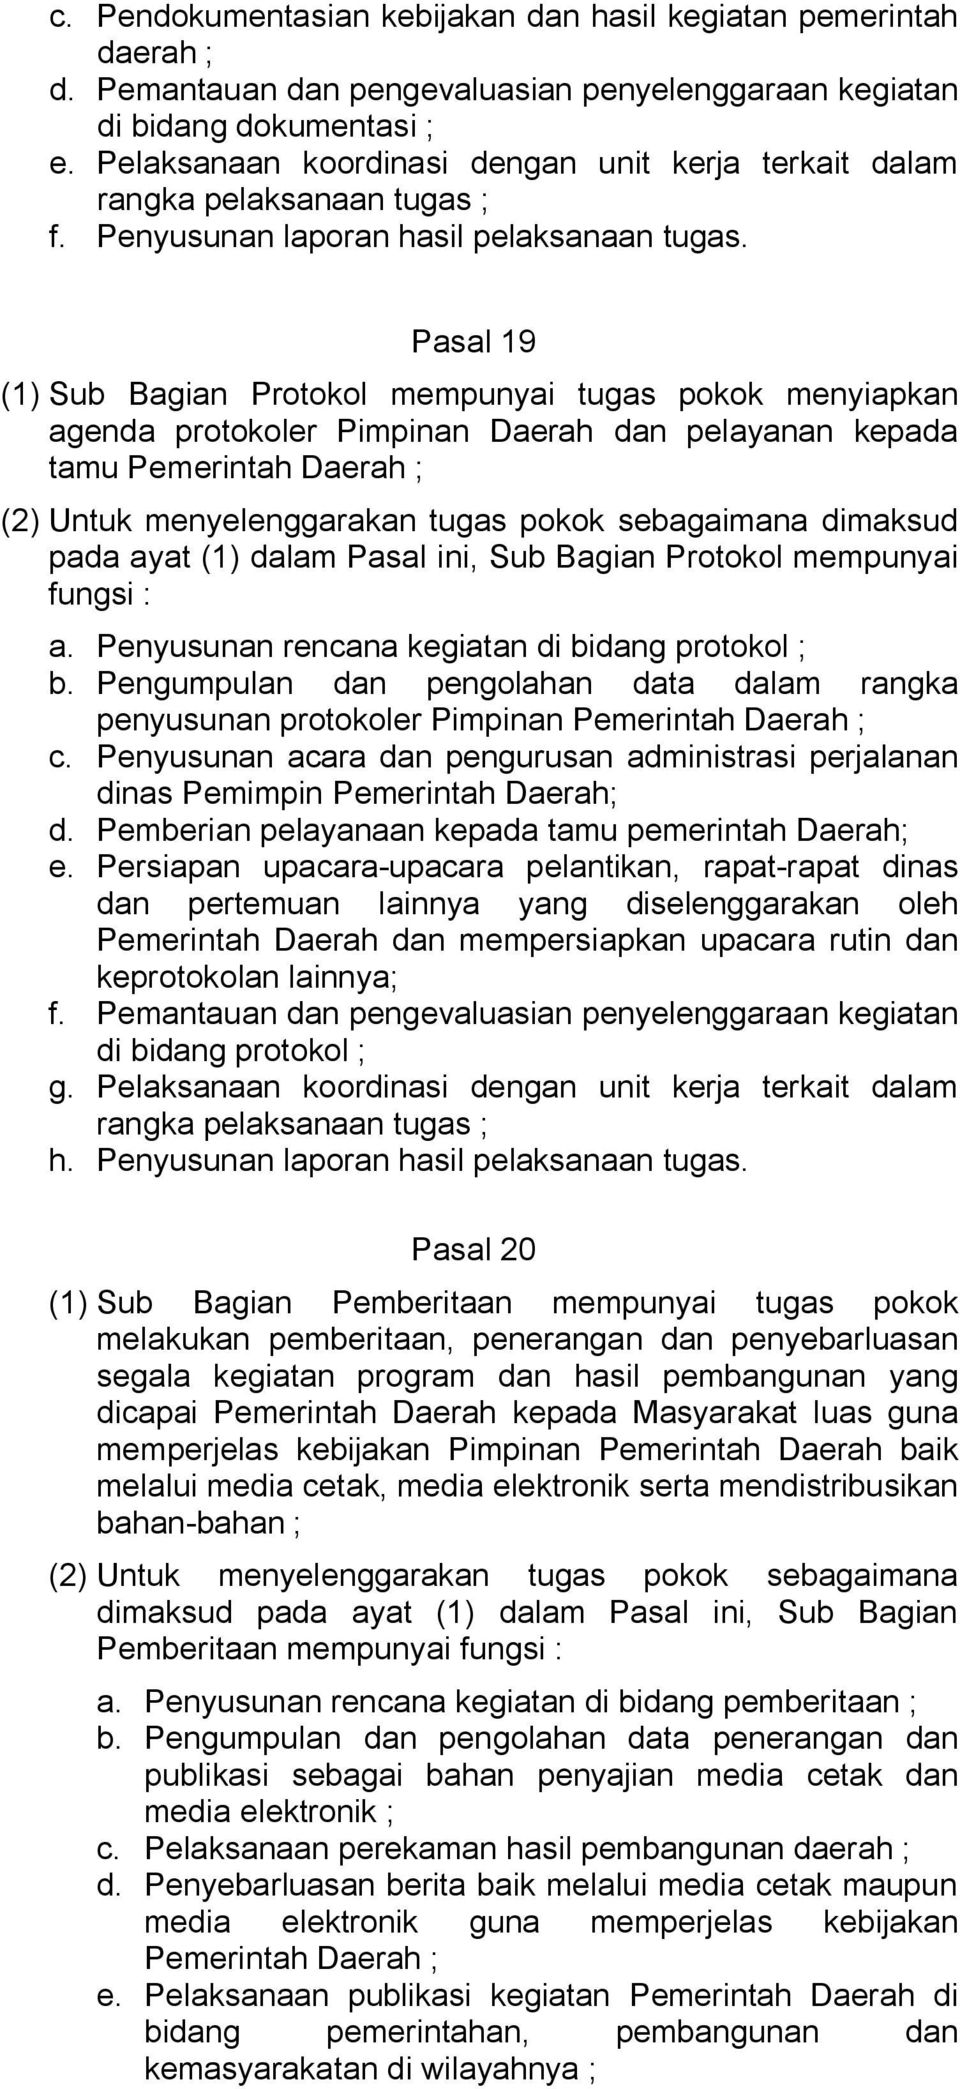 Pasal 19 (1) Sub Bagian Protokol mempunyai tugas pokok menyiapkan agenda protokoler Pimpinan Daerah dan pelayanan kepada tamu Pemerintah Daerah ; pada ayat (1) dalam Pasal ini, Sub Bagian Protokol